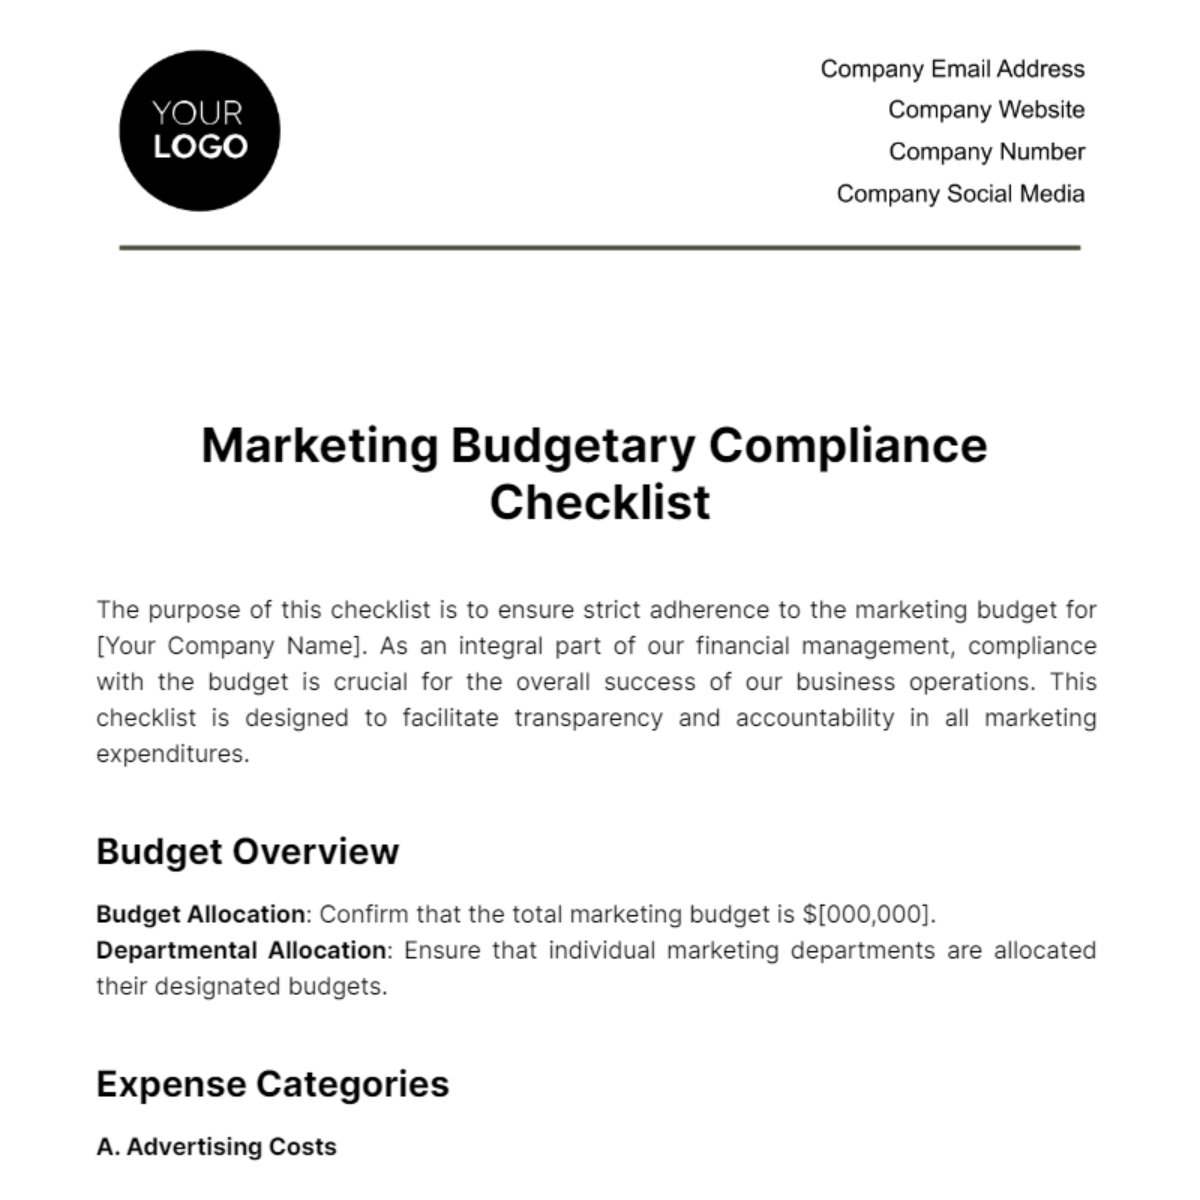 Free Marketing Budgetary Compliance Checklist Template